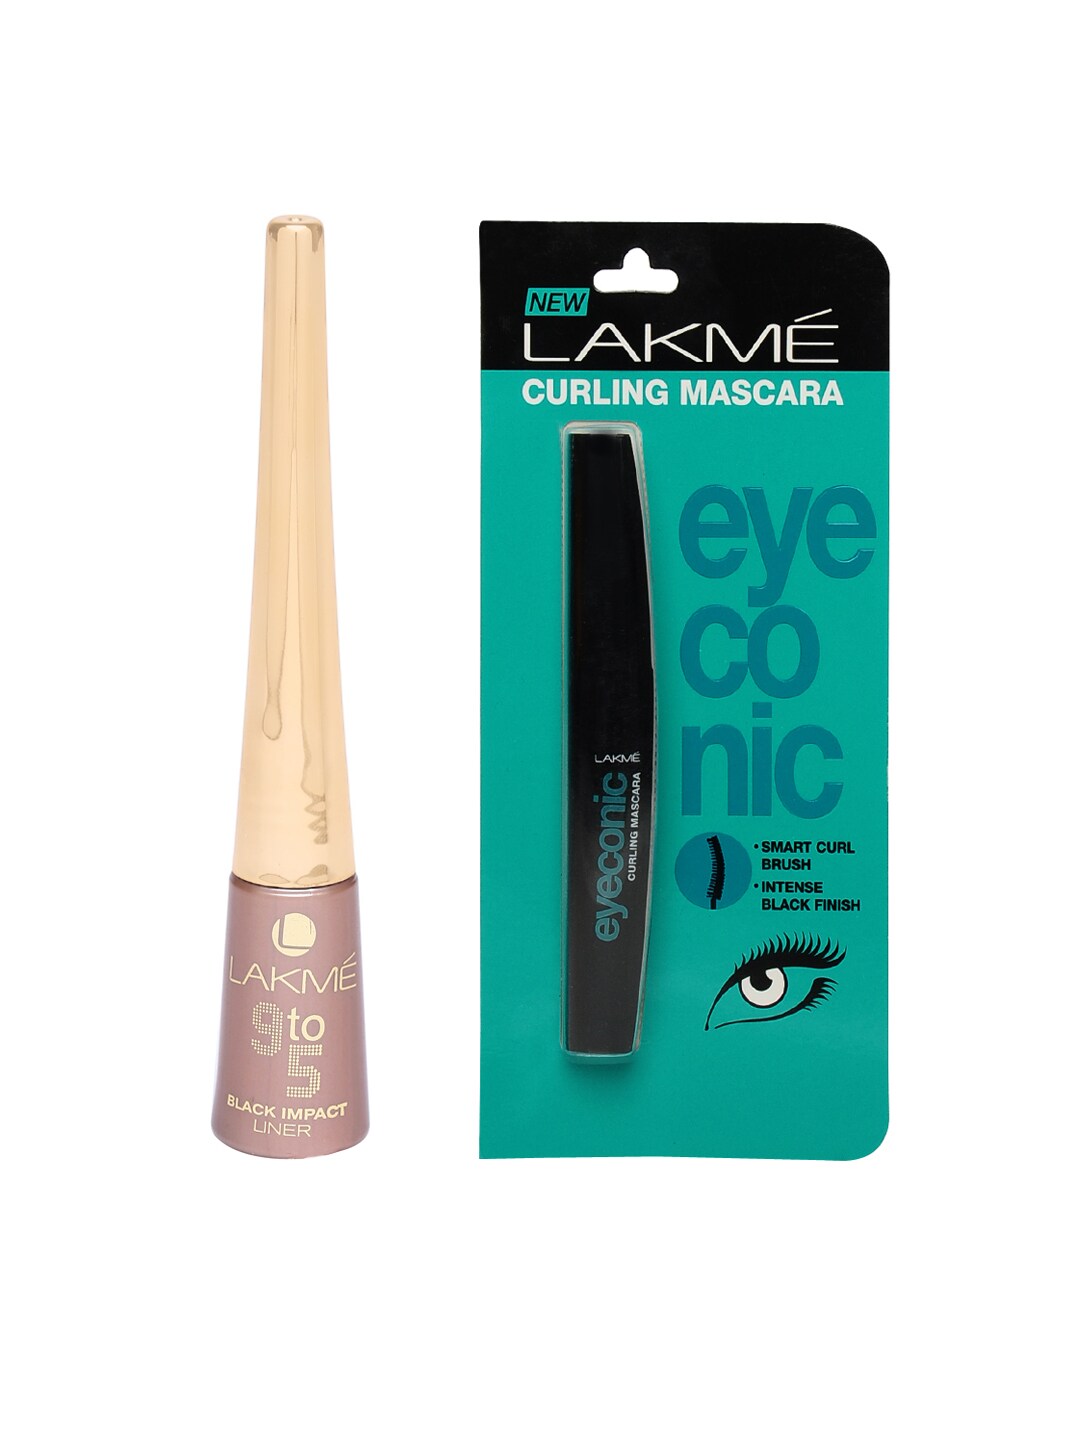 Lakme Eyeconic Curling Mascara & Black Impact Eyeliner Price in India